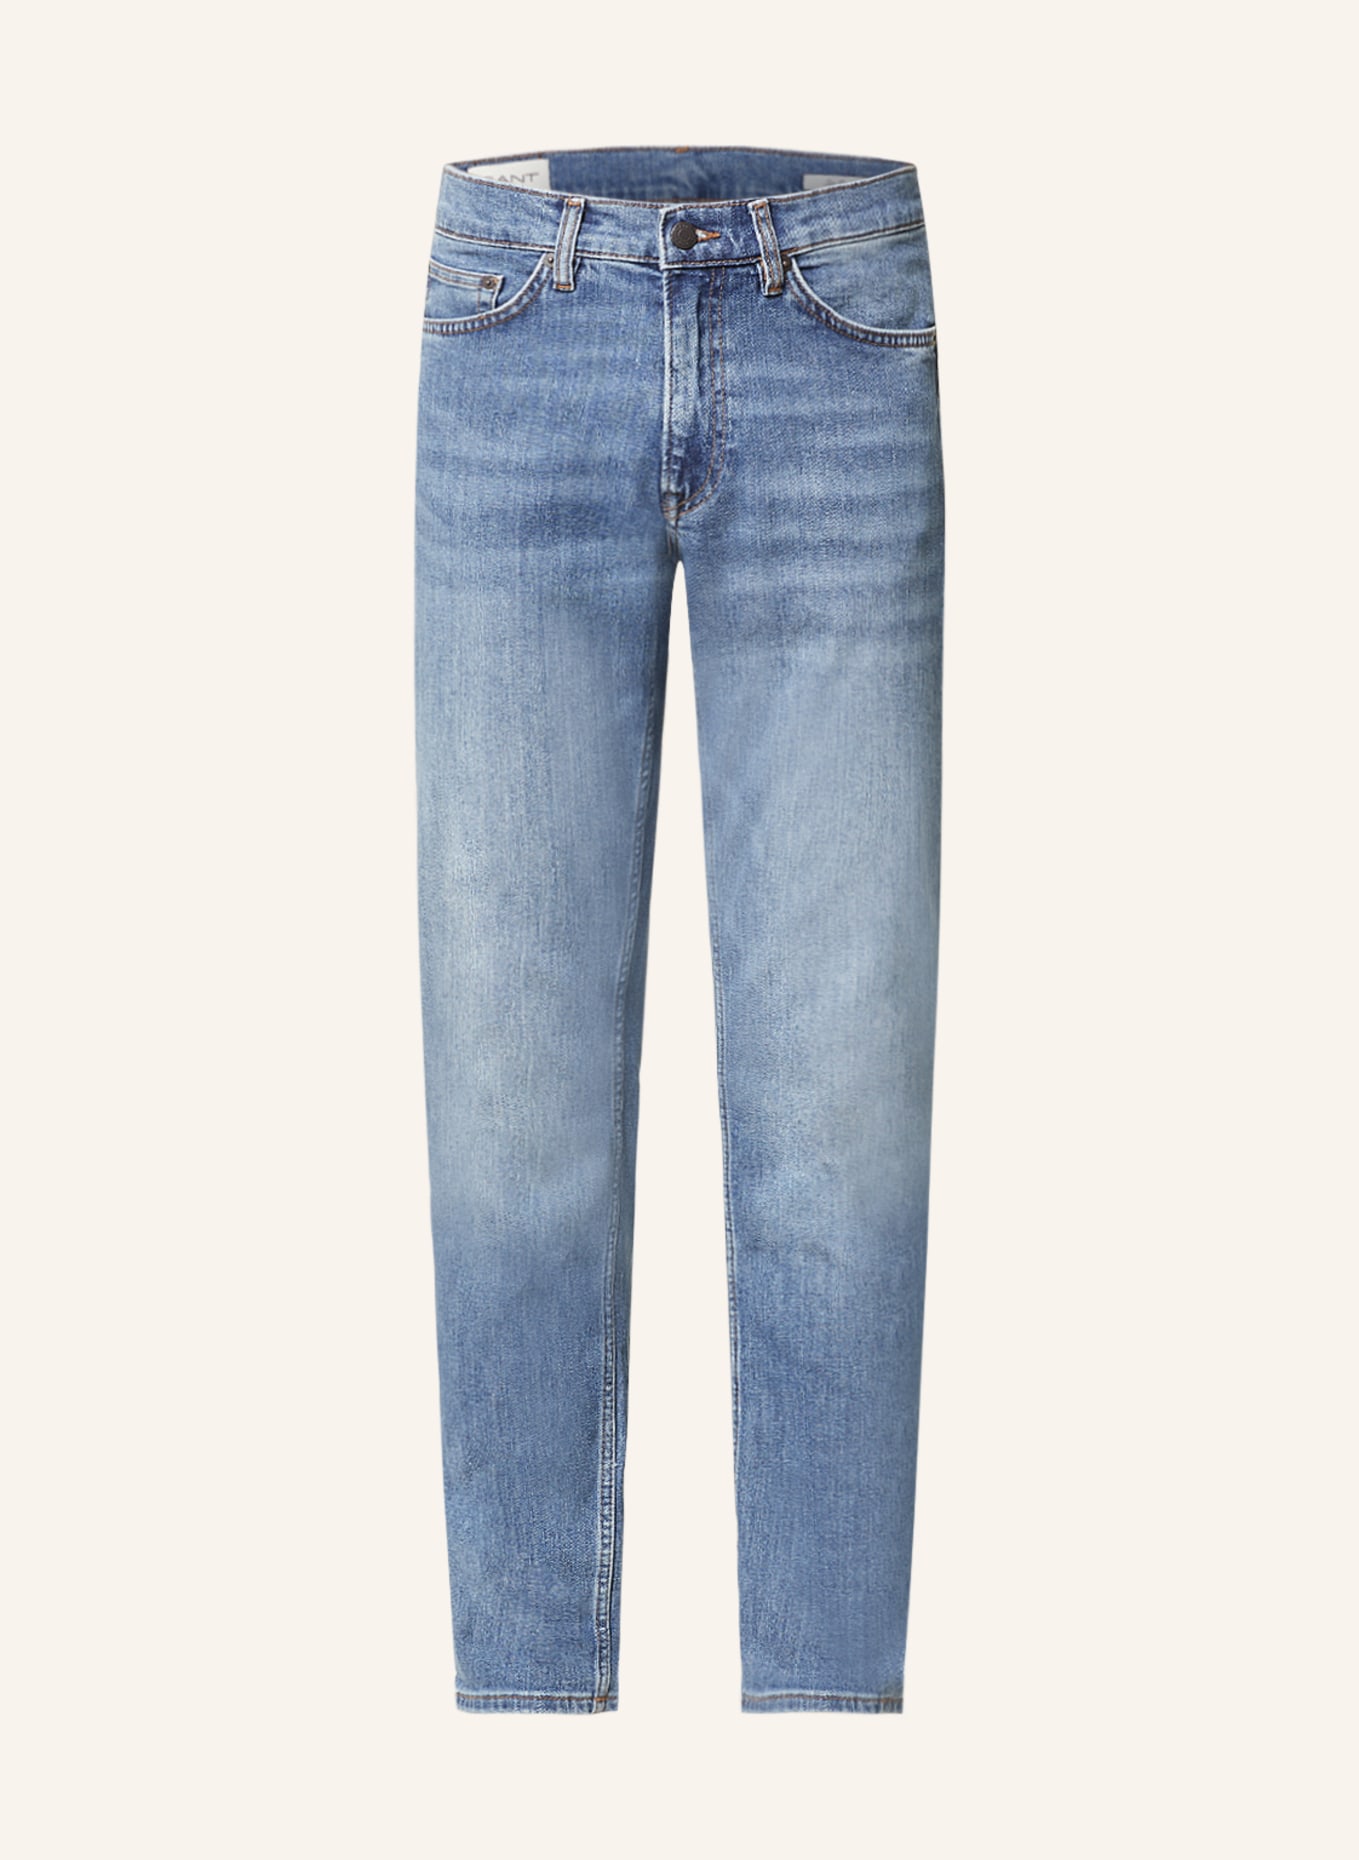 GANT Jeans Slim Fit, Farbe: 971 mid blue worn in (Bild 1)